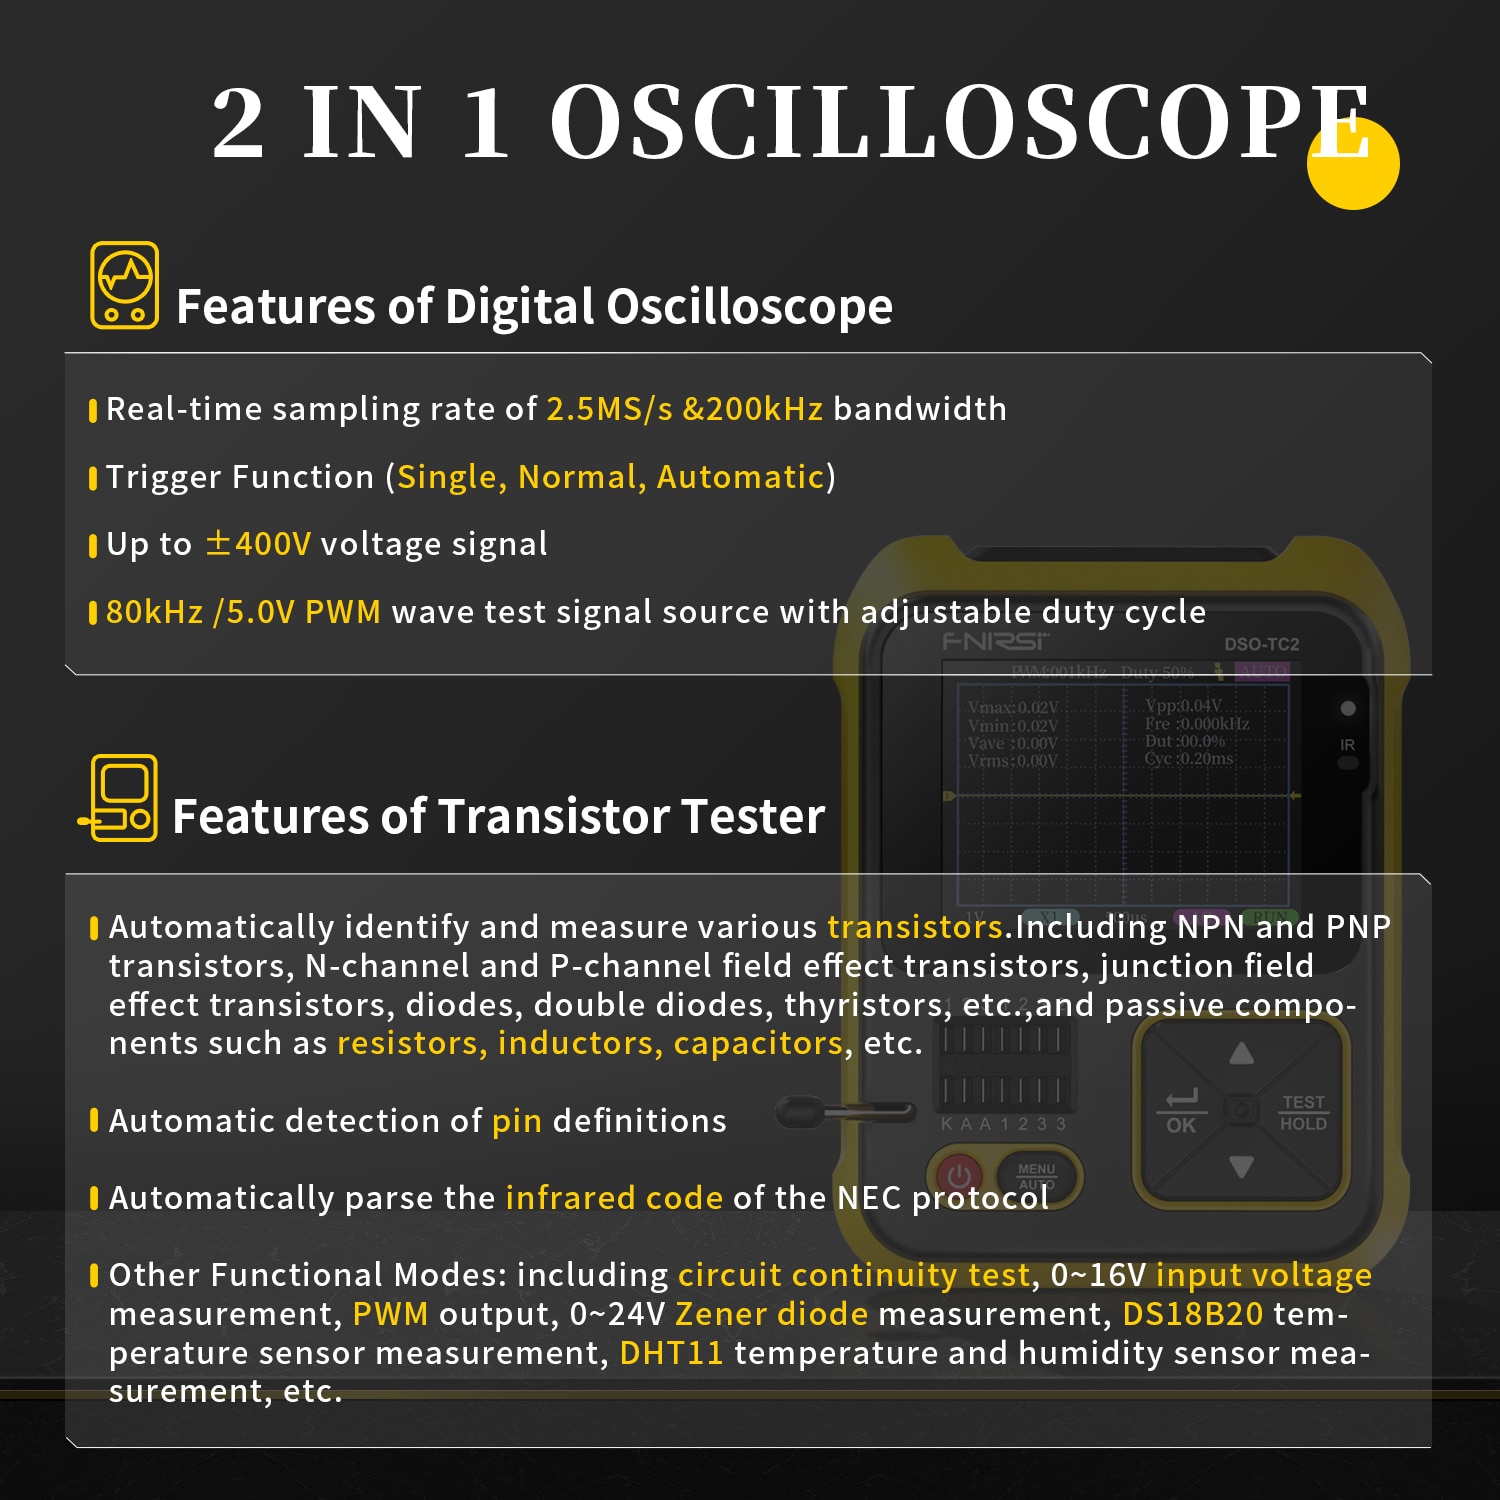 FNIRSI DSO-TC2 휴대용 디지털 오실로스코프 트랜지스터 테스터 2합일 다기능 만용계 다이오드 전압 LCR 검사 PWM 출력